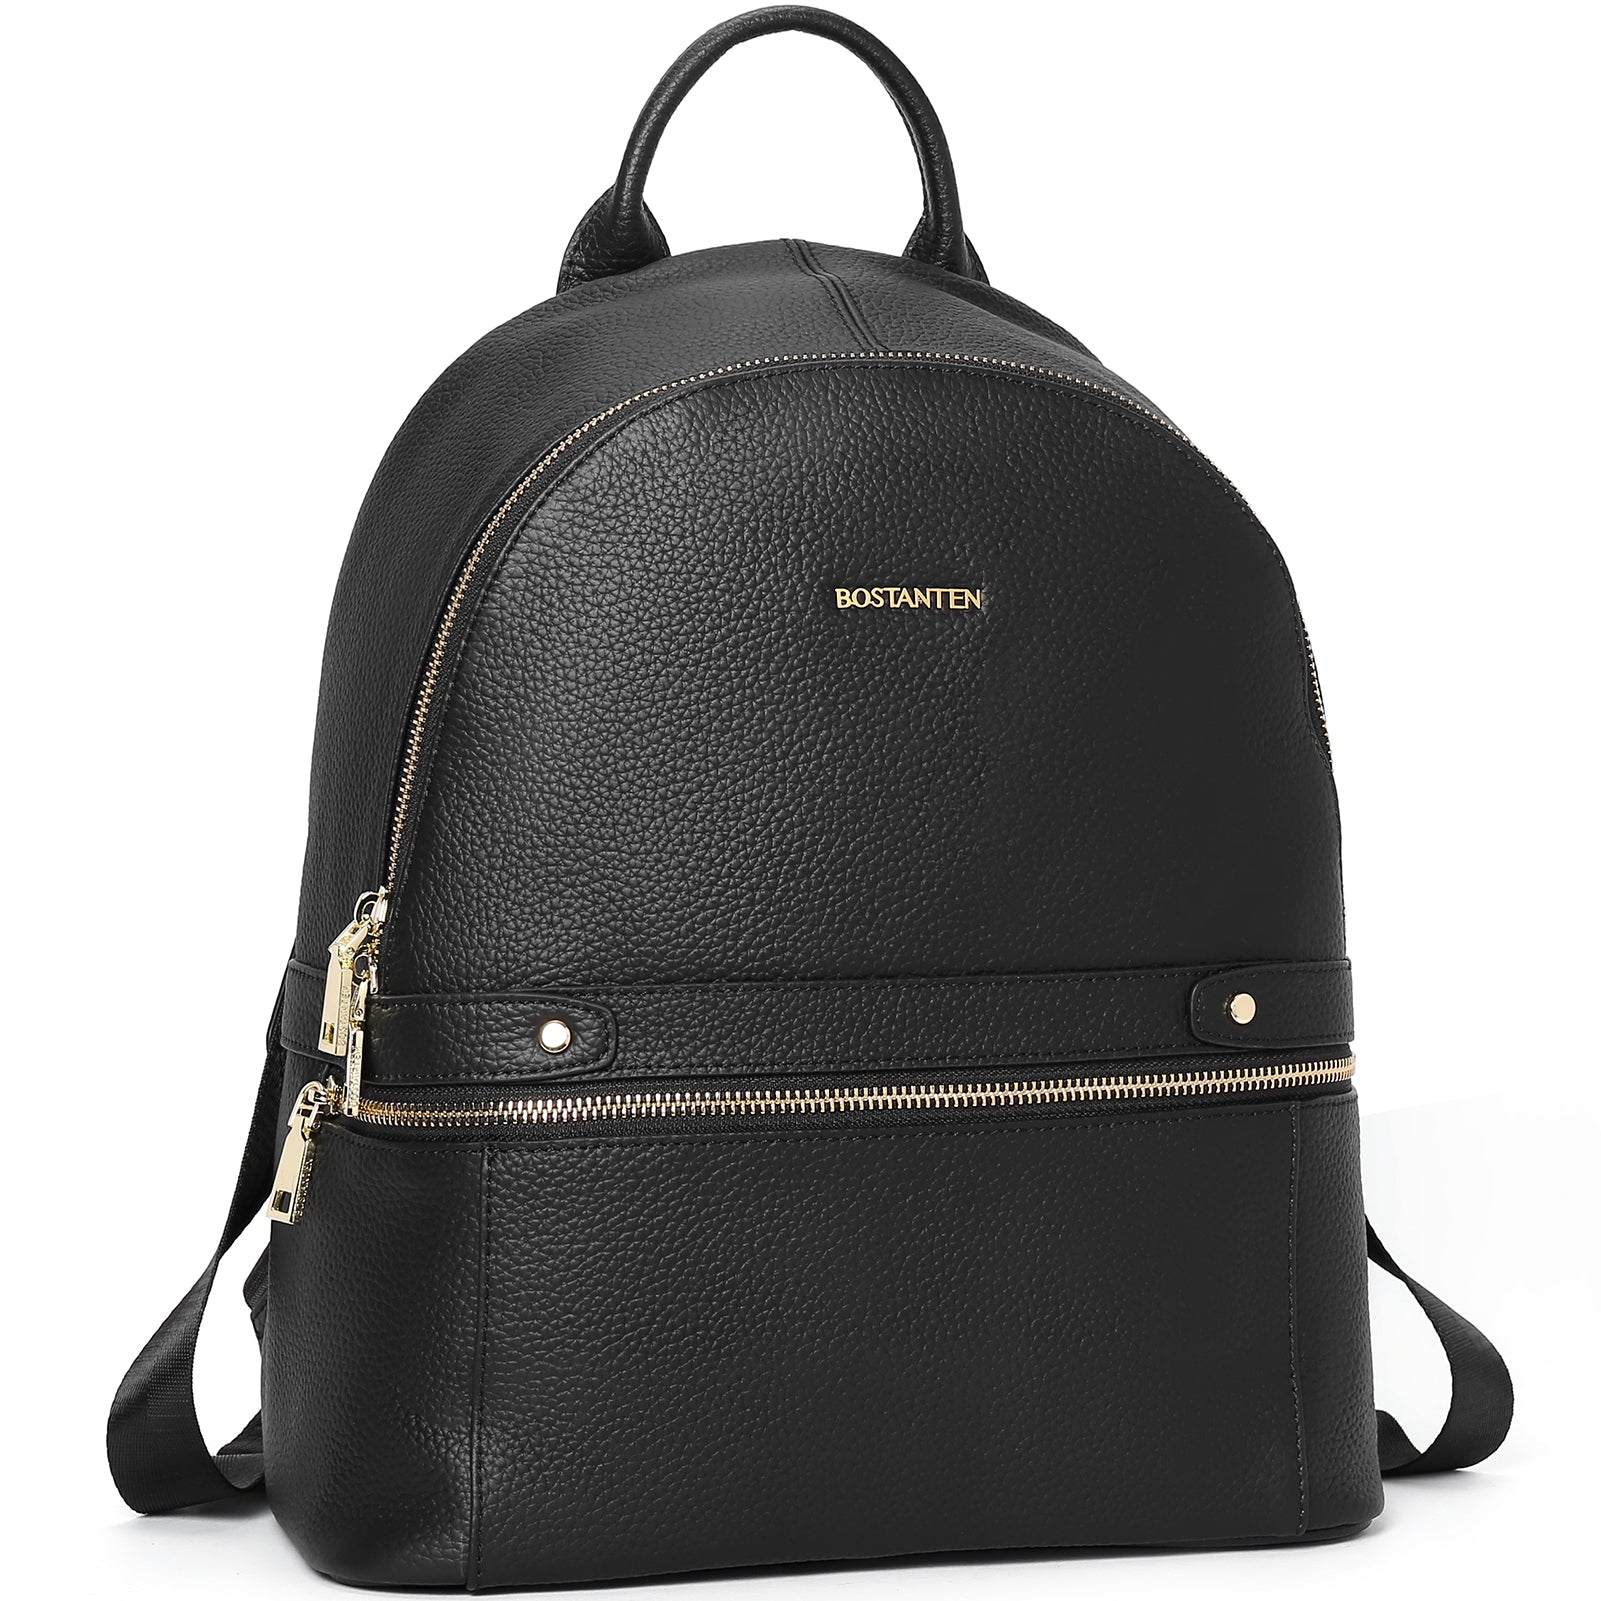 BOSTANTEN Backpack Purse for Women Travel Fashion Backpack Genuine Lea ...